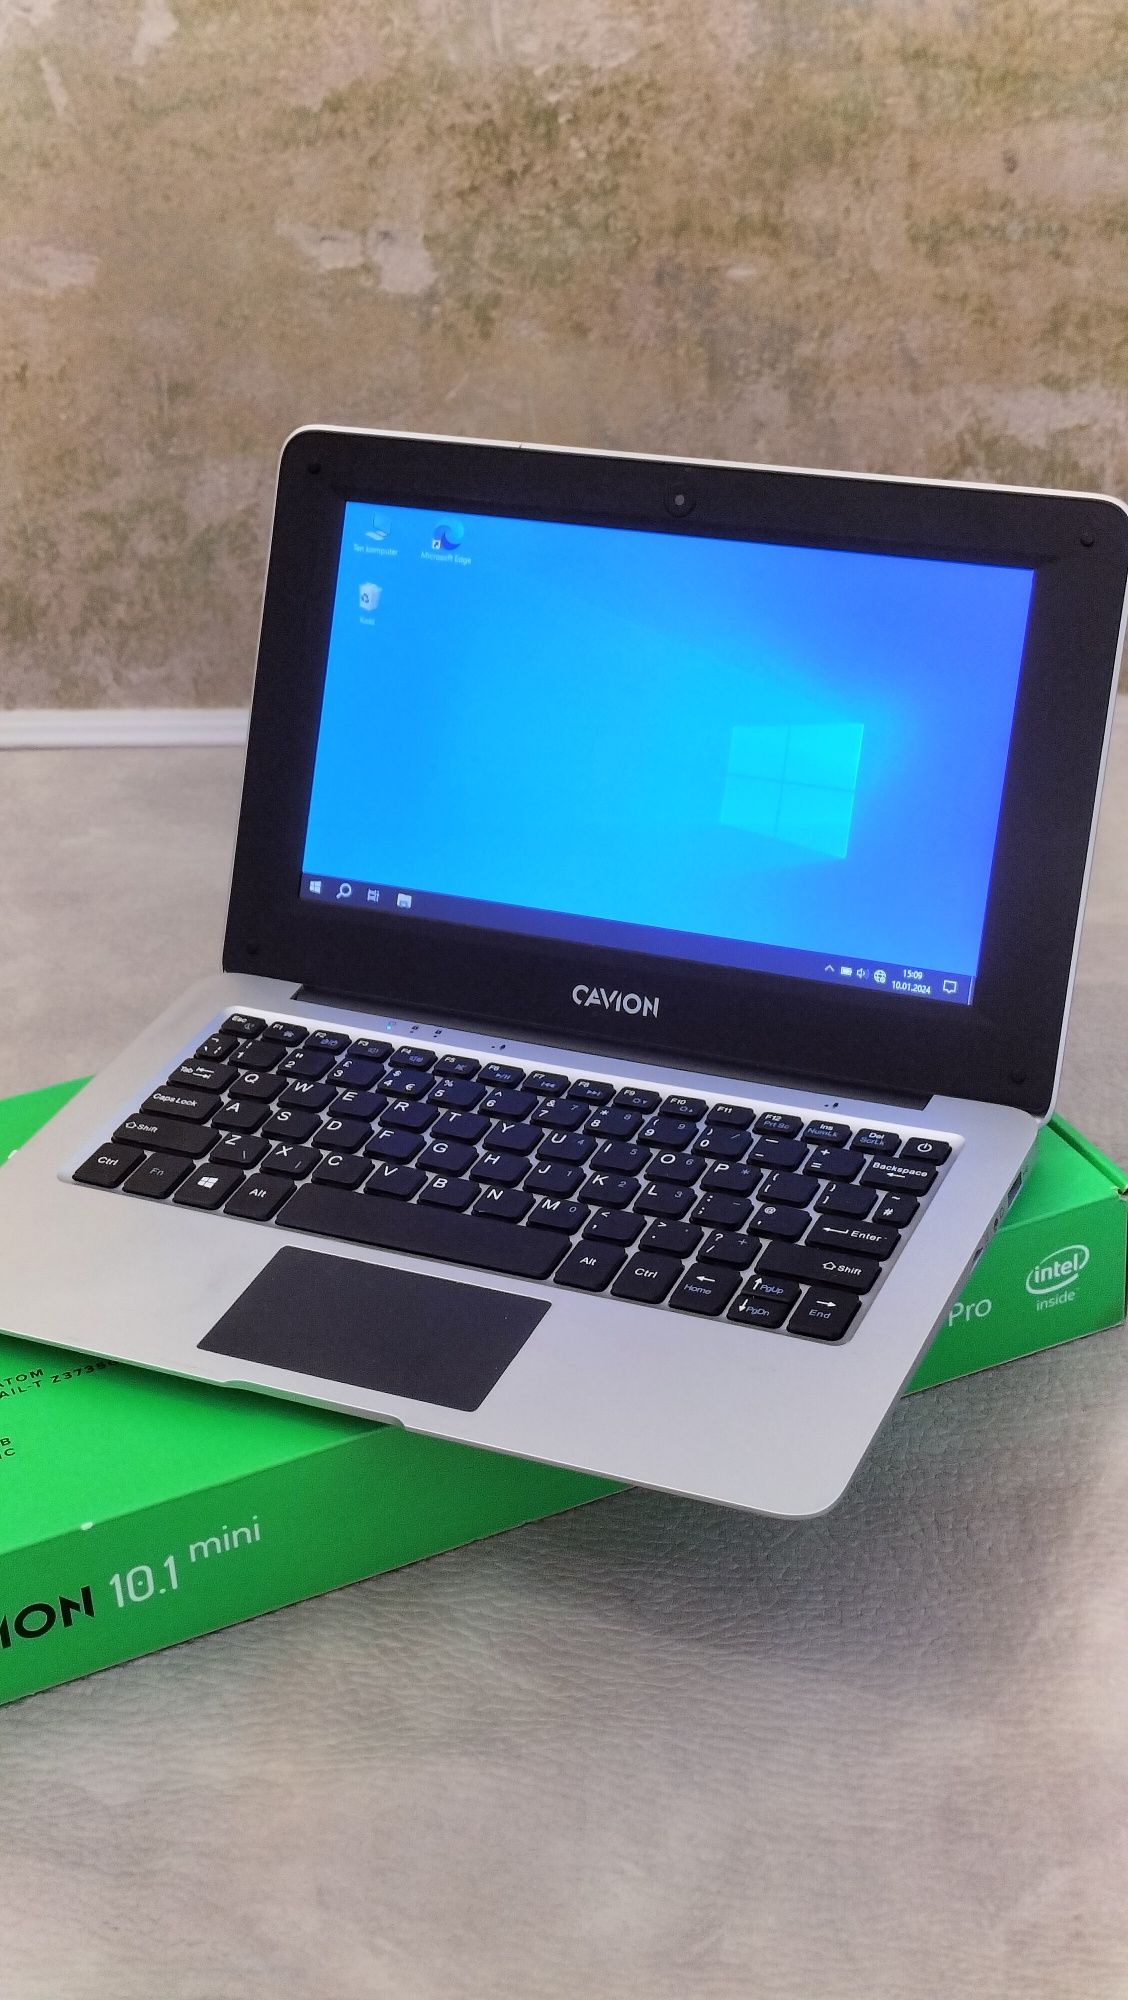 Laptop Cavion 10.1 mini Windows 10